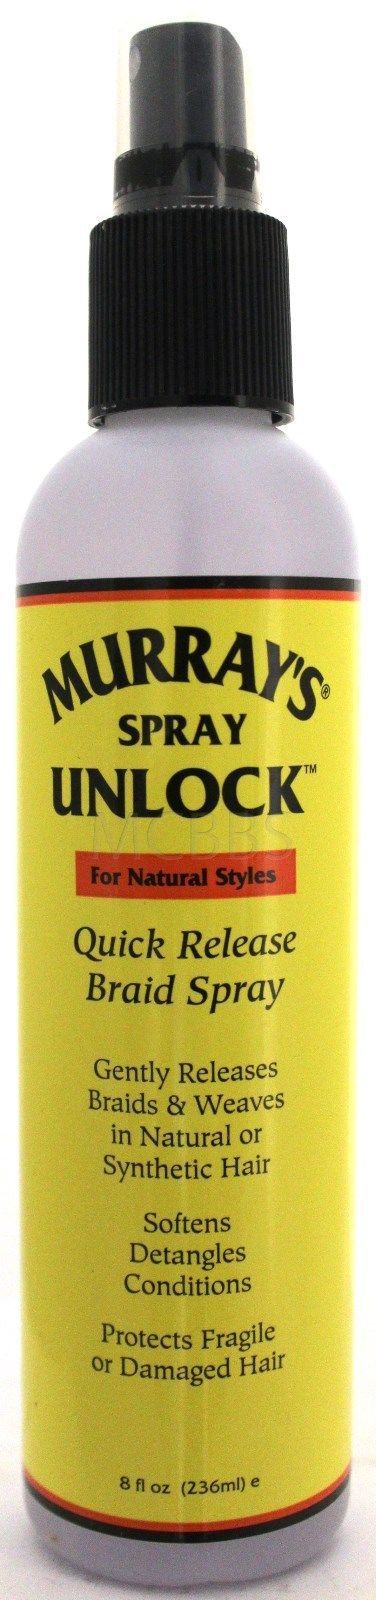 Murray's Spray Unlock